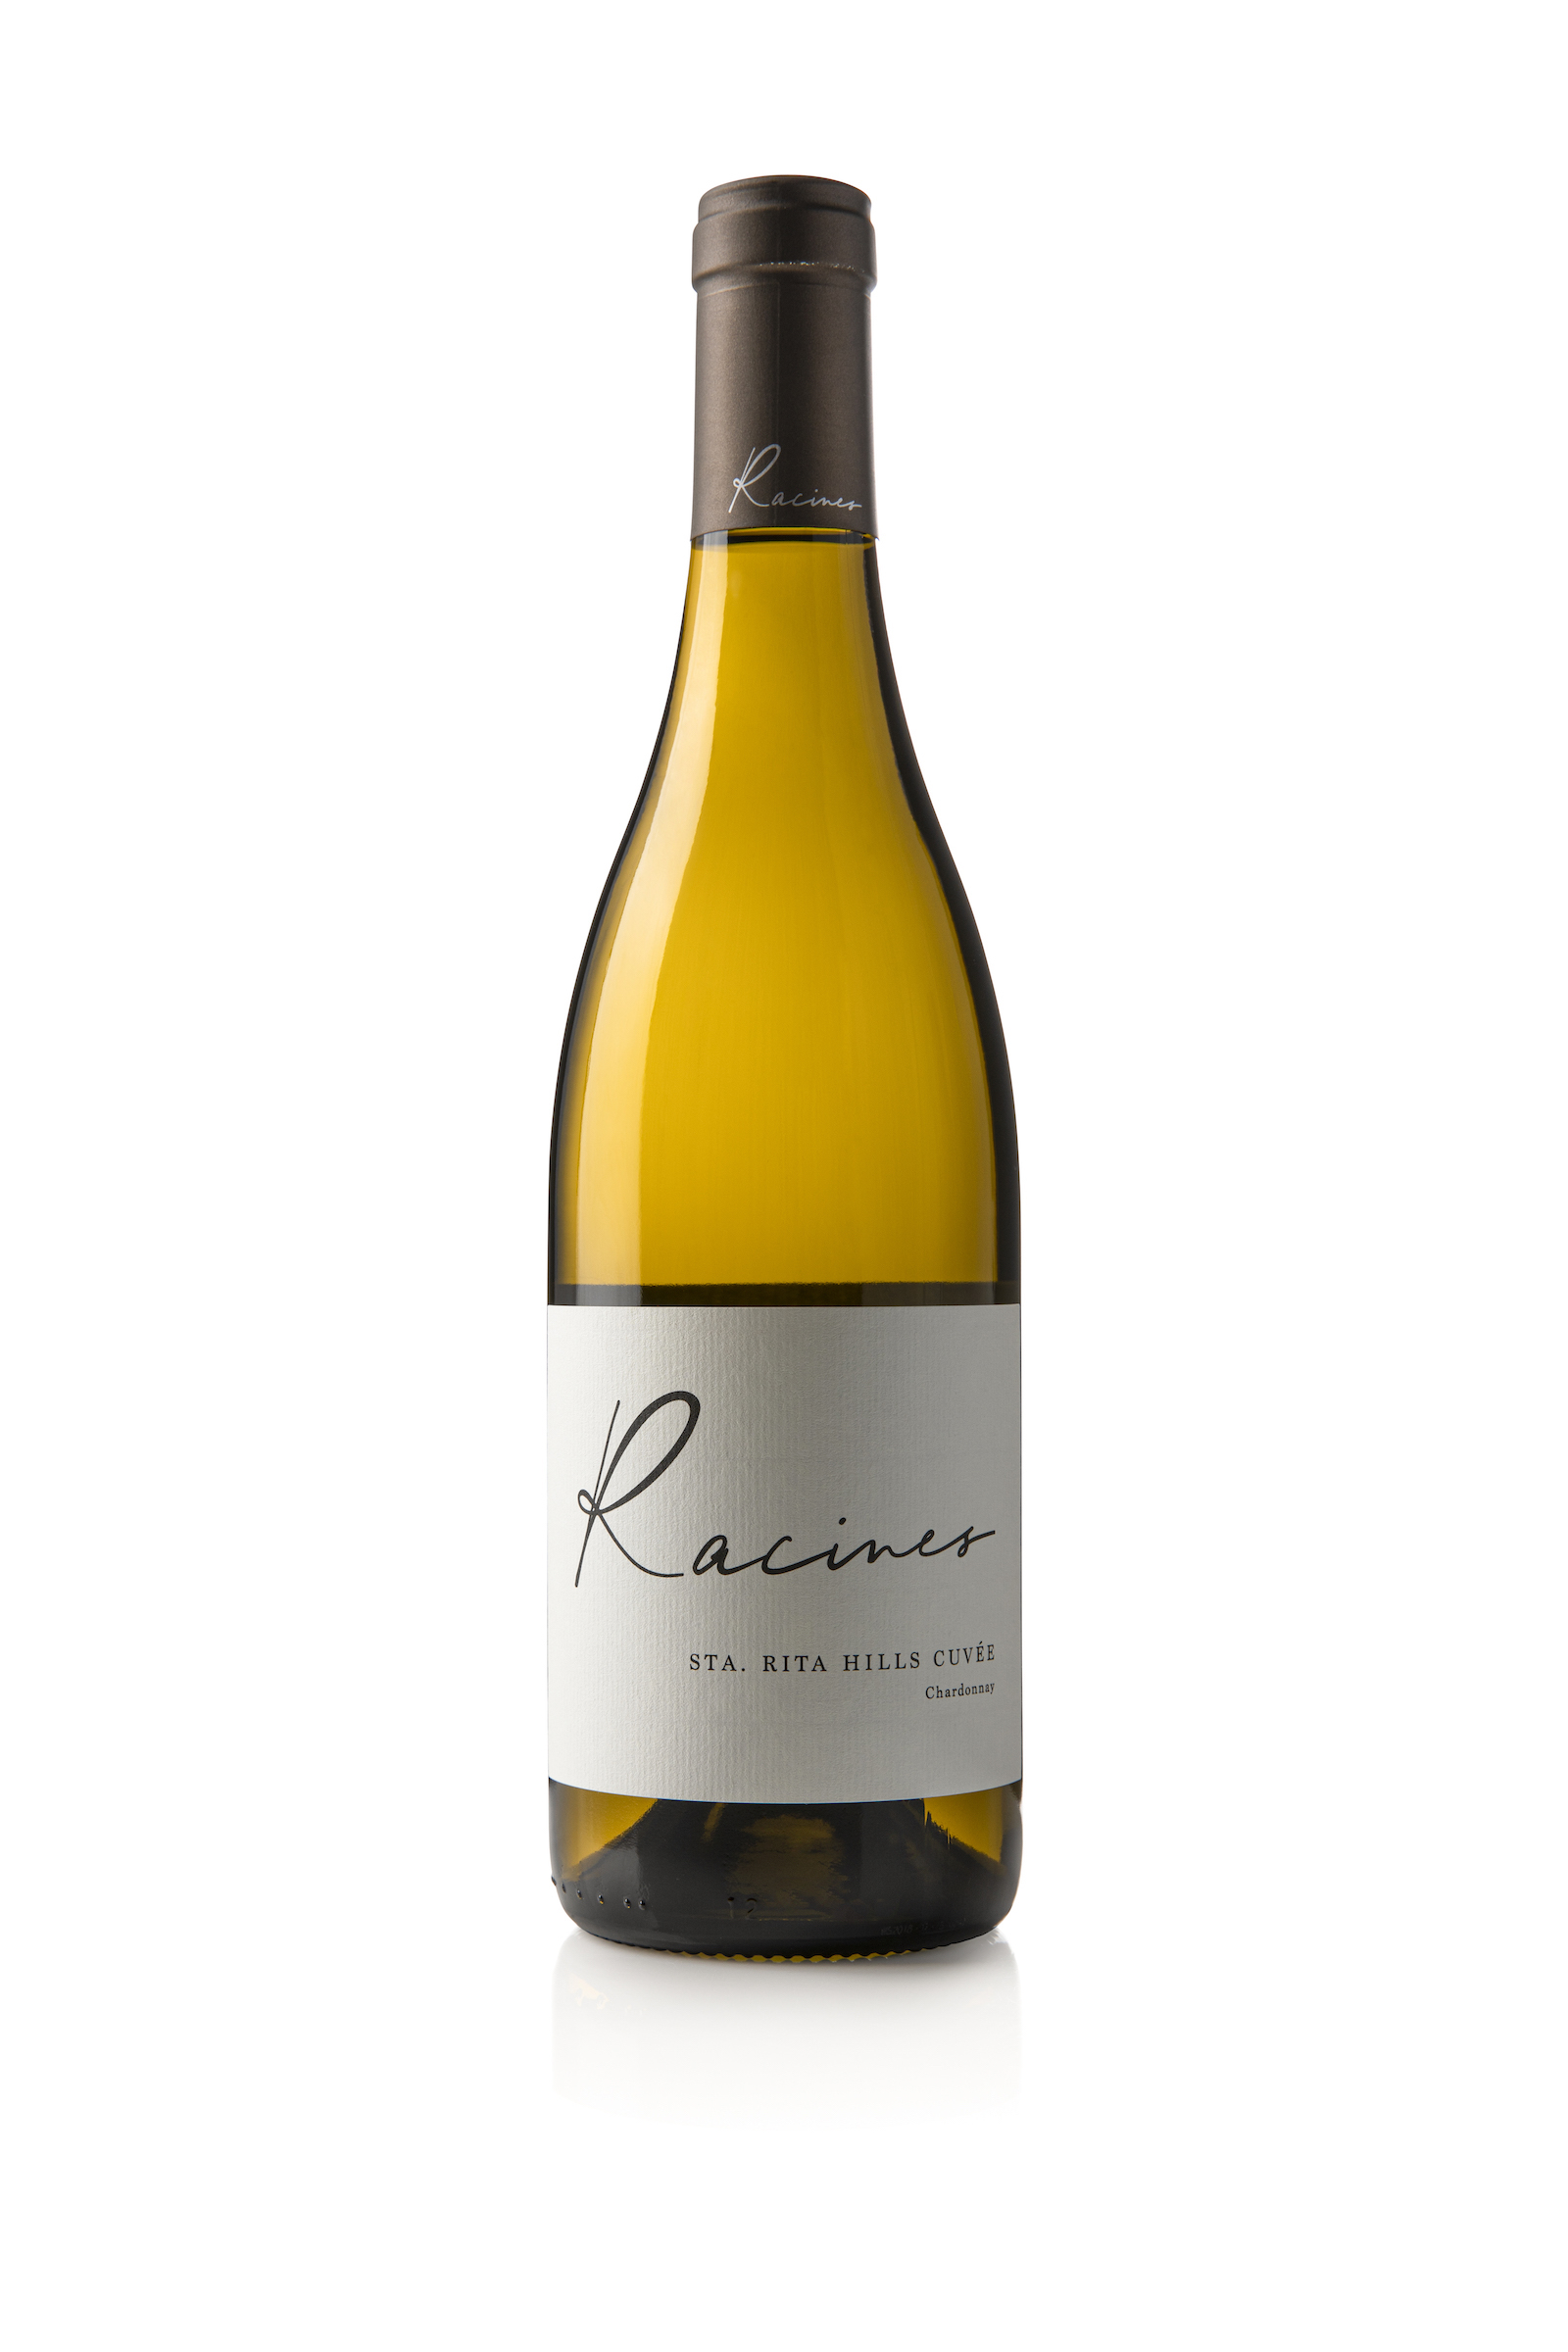 Bottle of Racines Sta. Rita Hills Cuvee Chardonnay